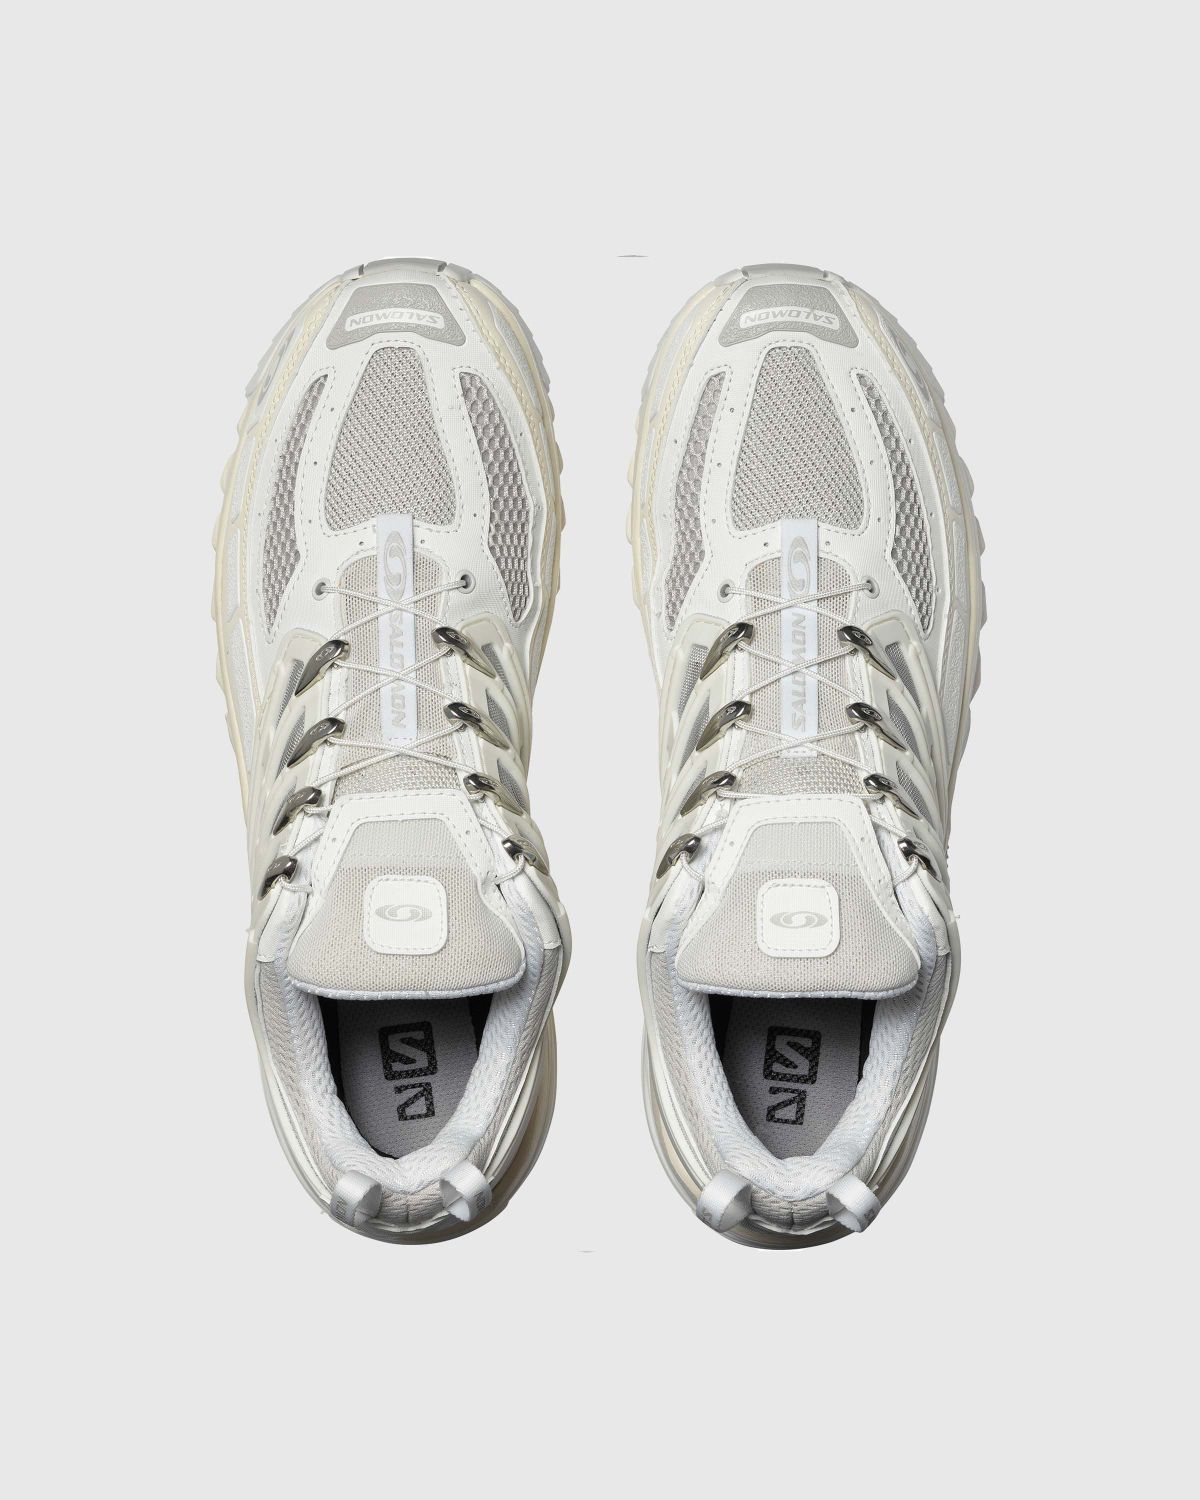 Salomon – ACS PRO White/Vanilla Ice/Lunar Rock - Sneakers - White - Image 4